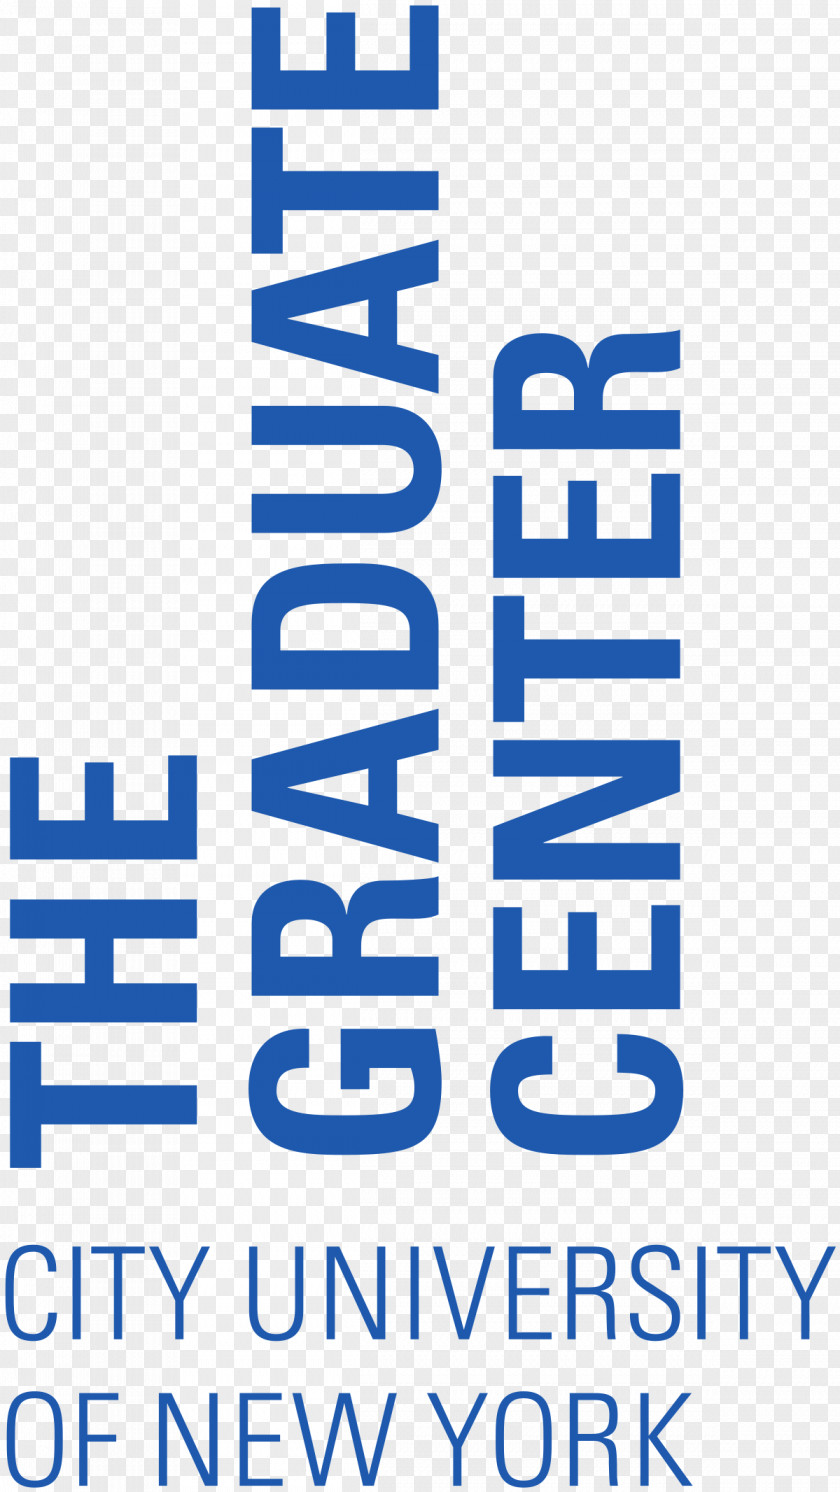 The Graduate Center, CUNY City University Of New York Organization PNG